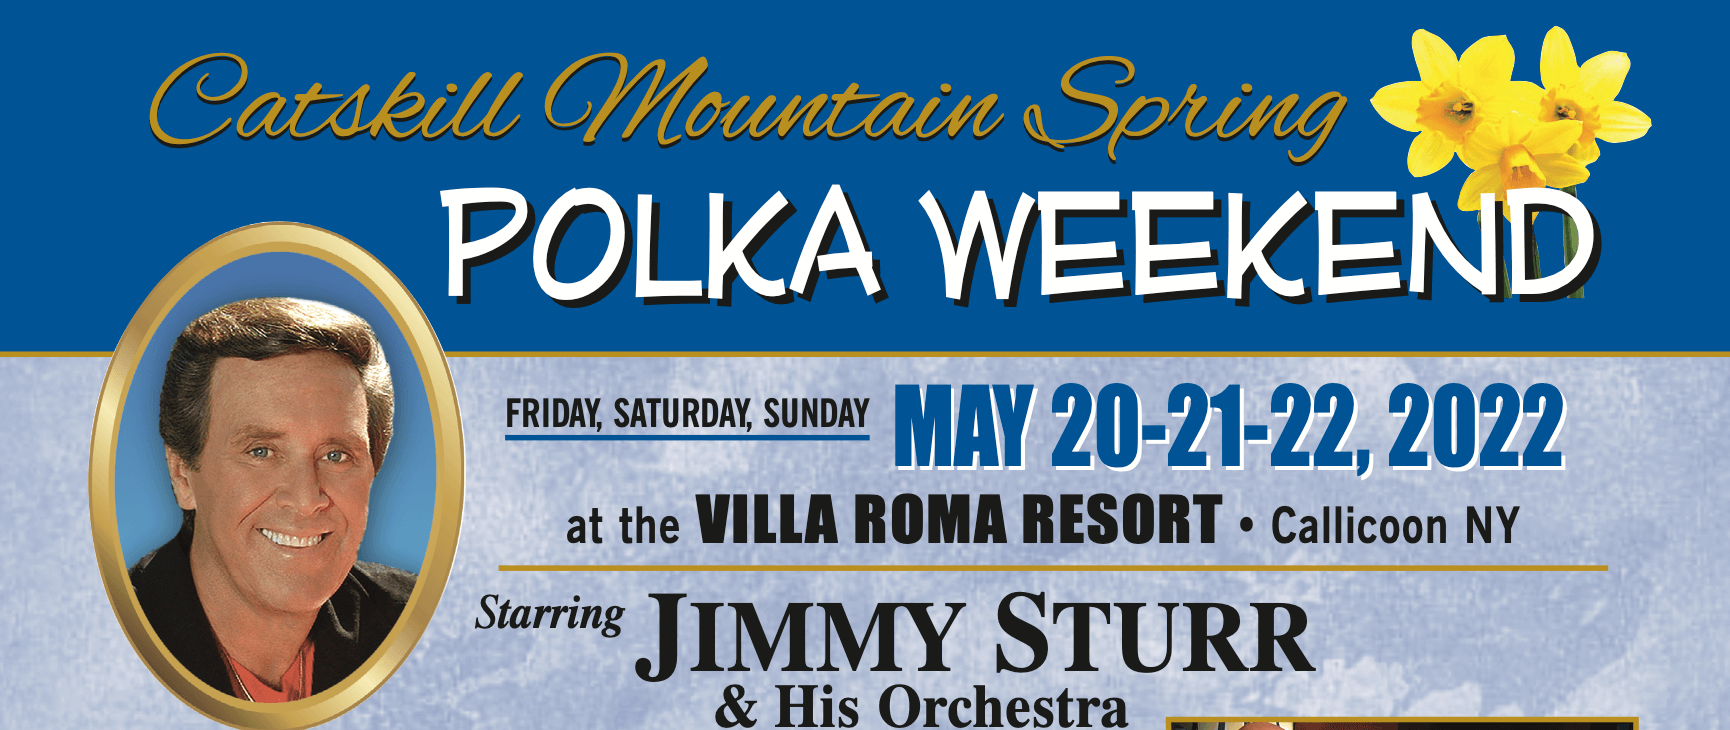 Catskill Mountain Spring Polka Weekend